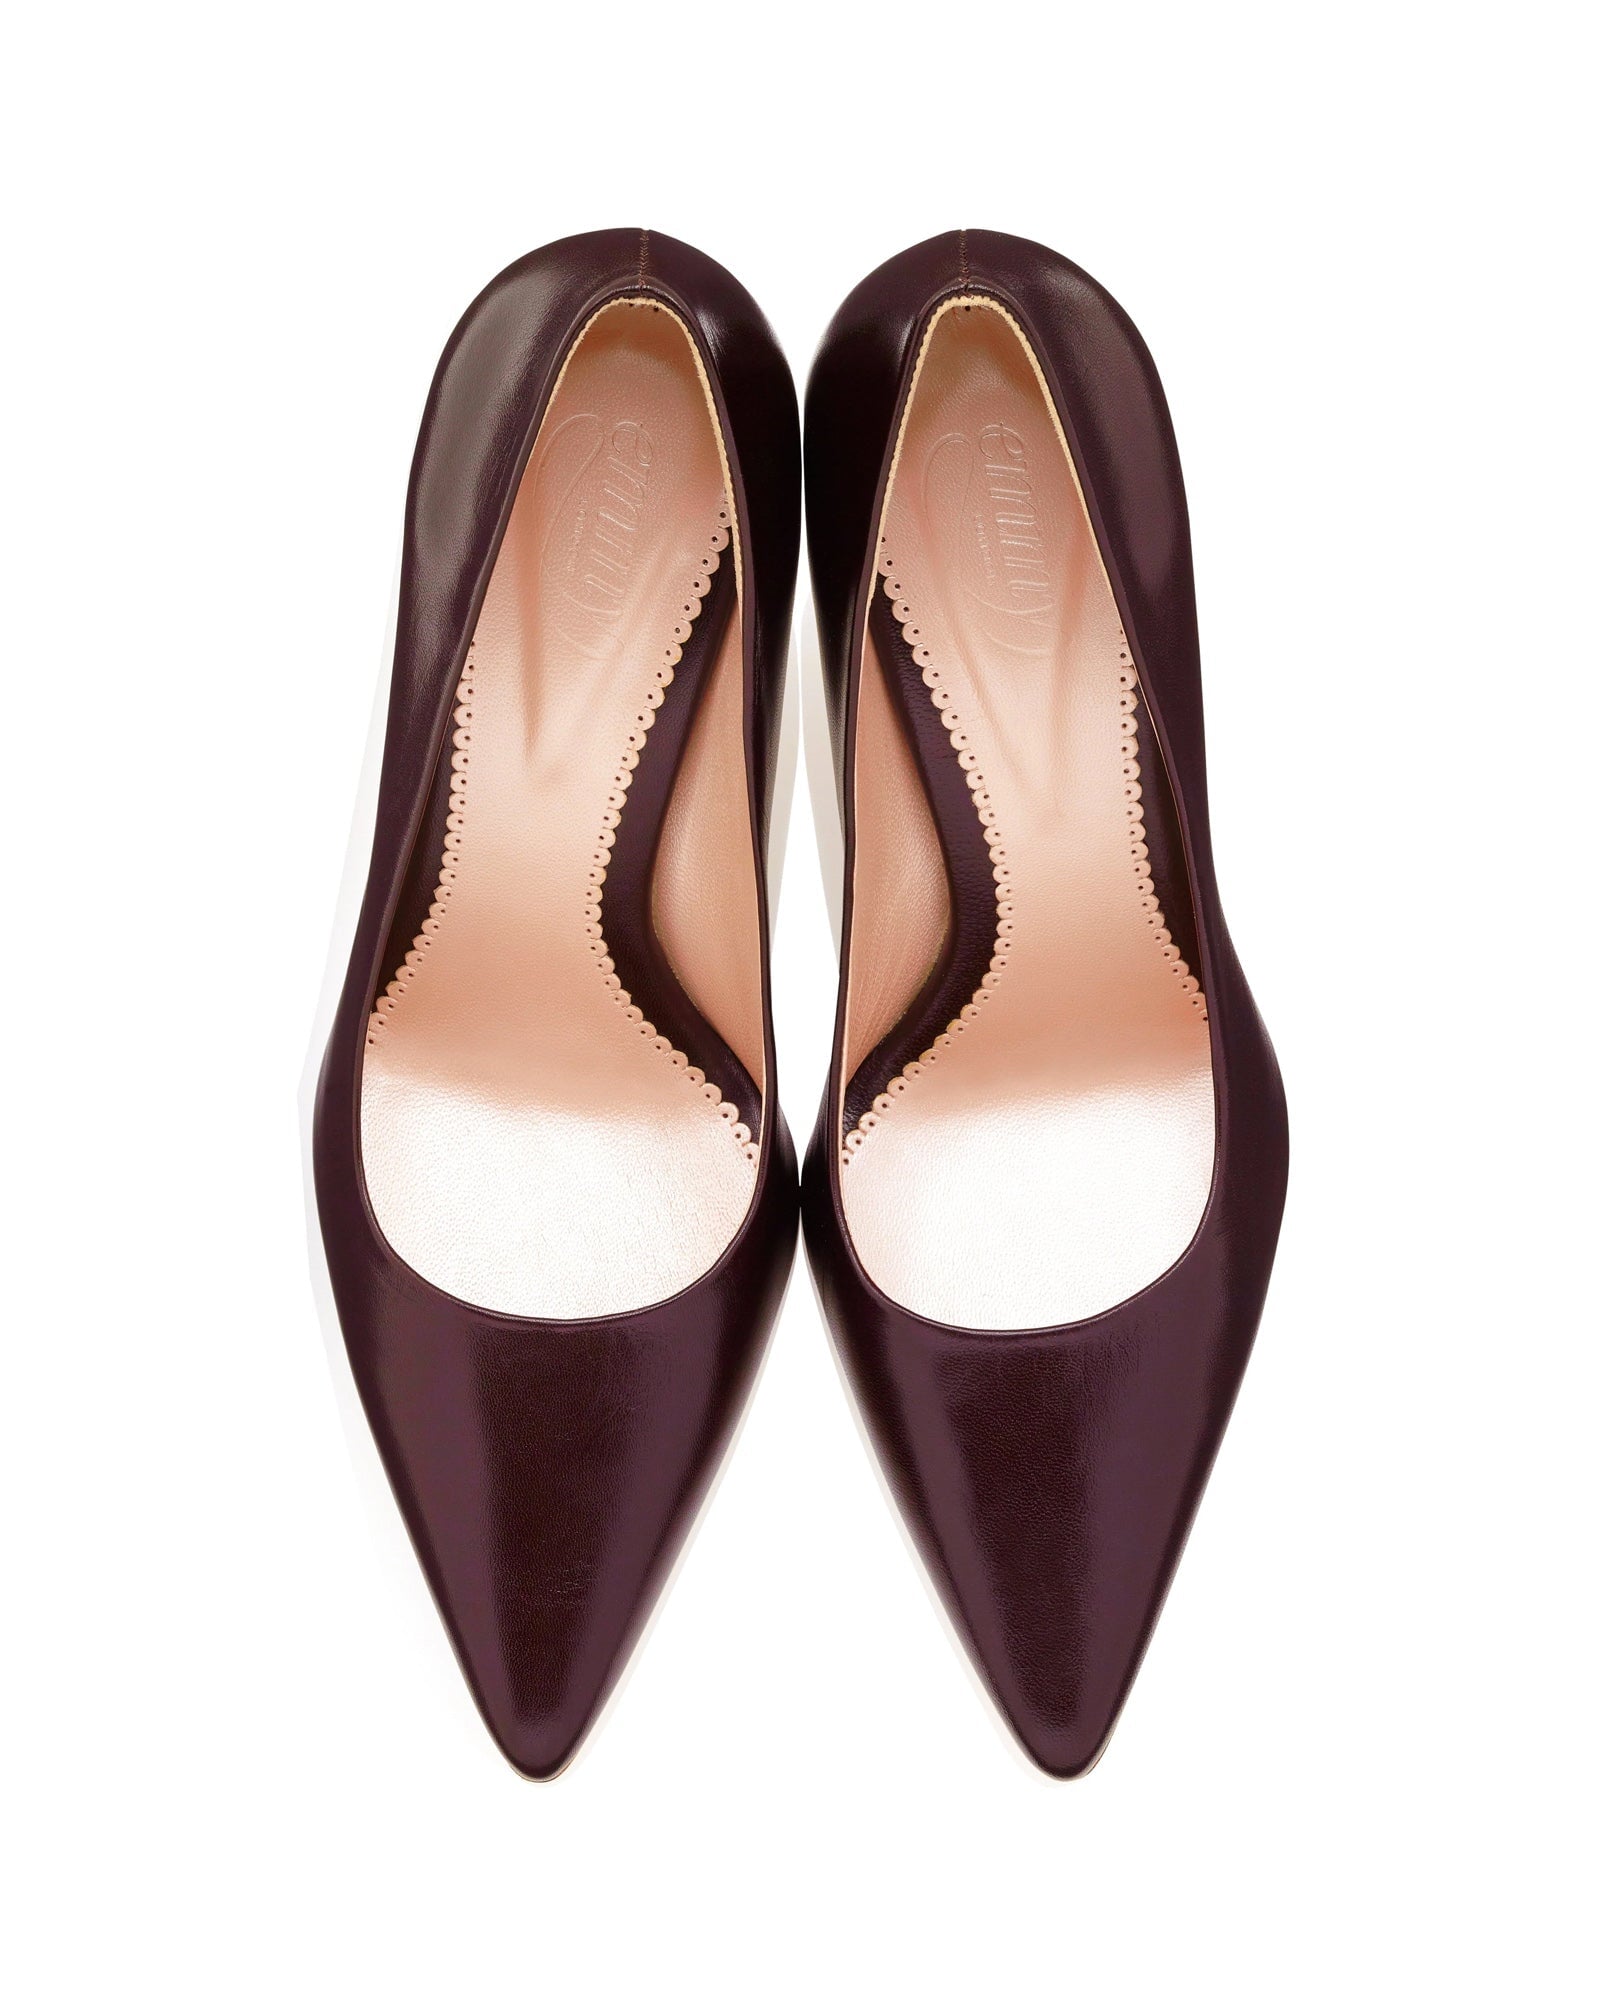 Olivia Mid Heel Fashion Shoe Dark Red Leather Court Shoe  image